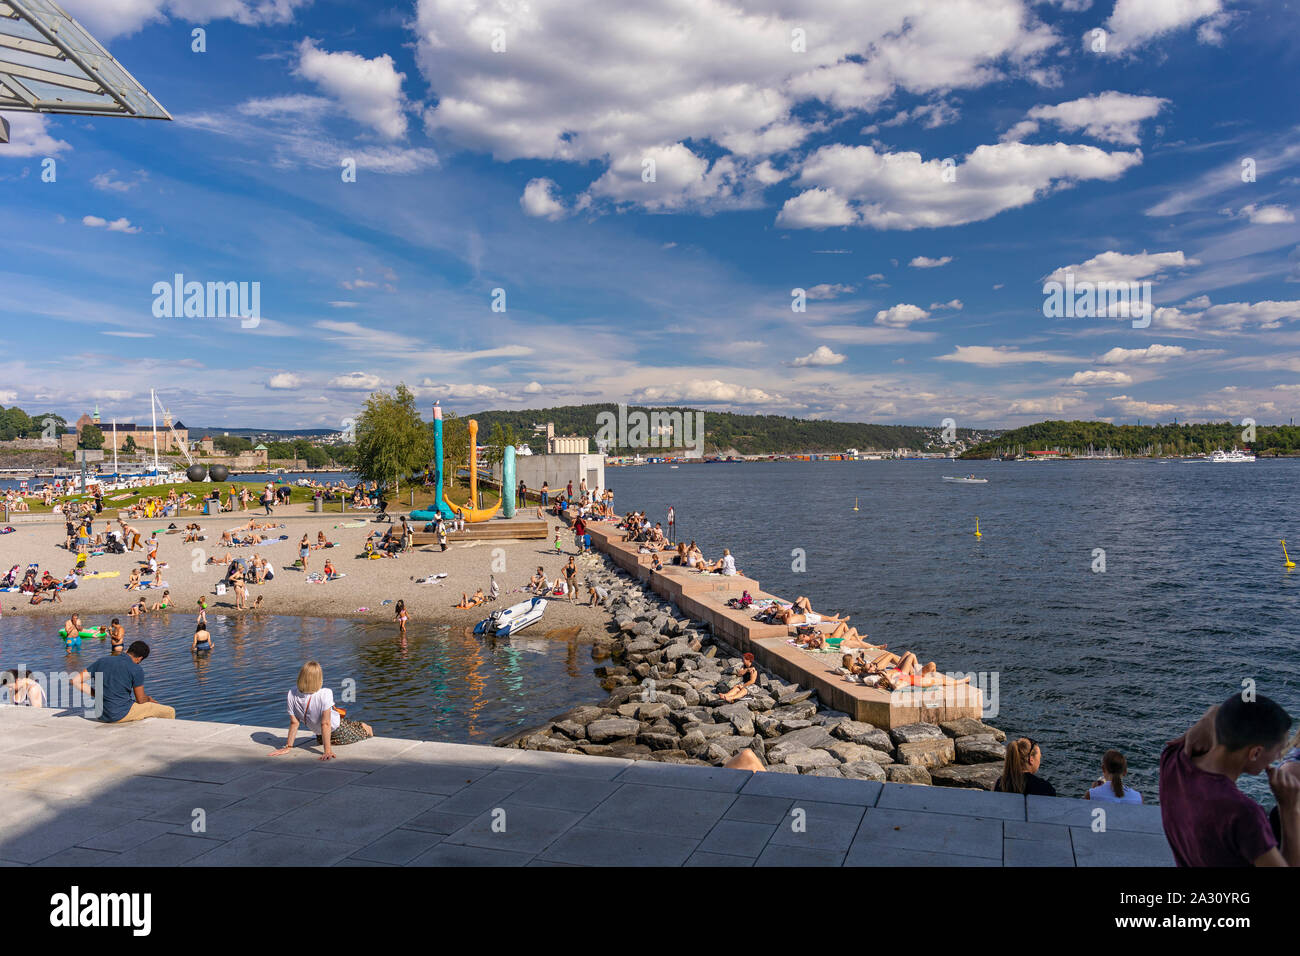 OSLO, NORWAY - People sunbathing and swimming at Filipstad, Oslo waterfront. Stock Photo